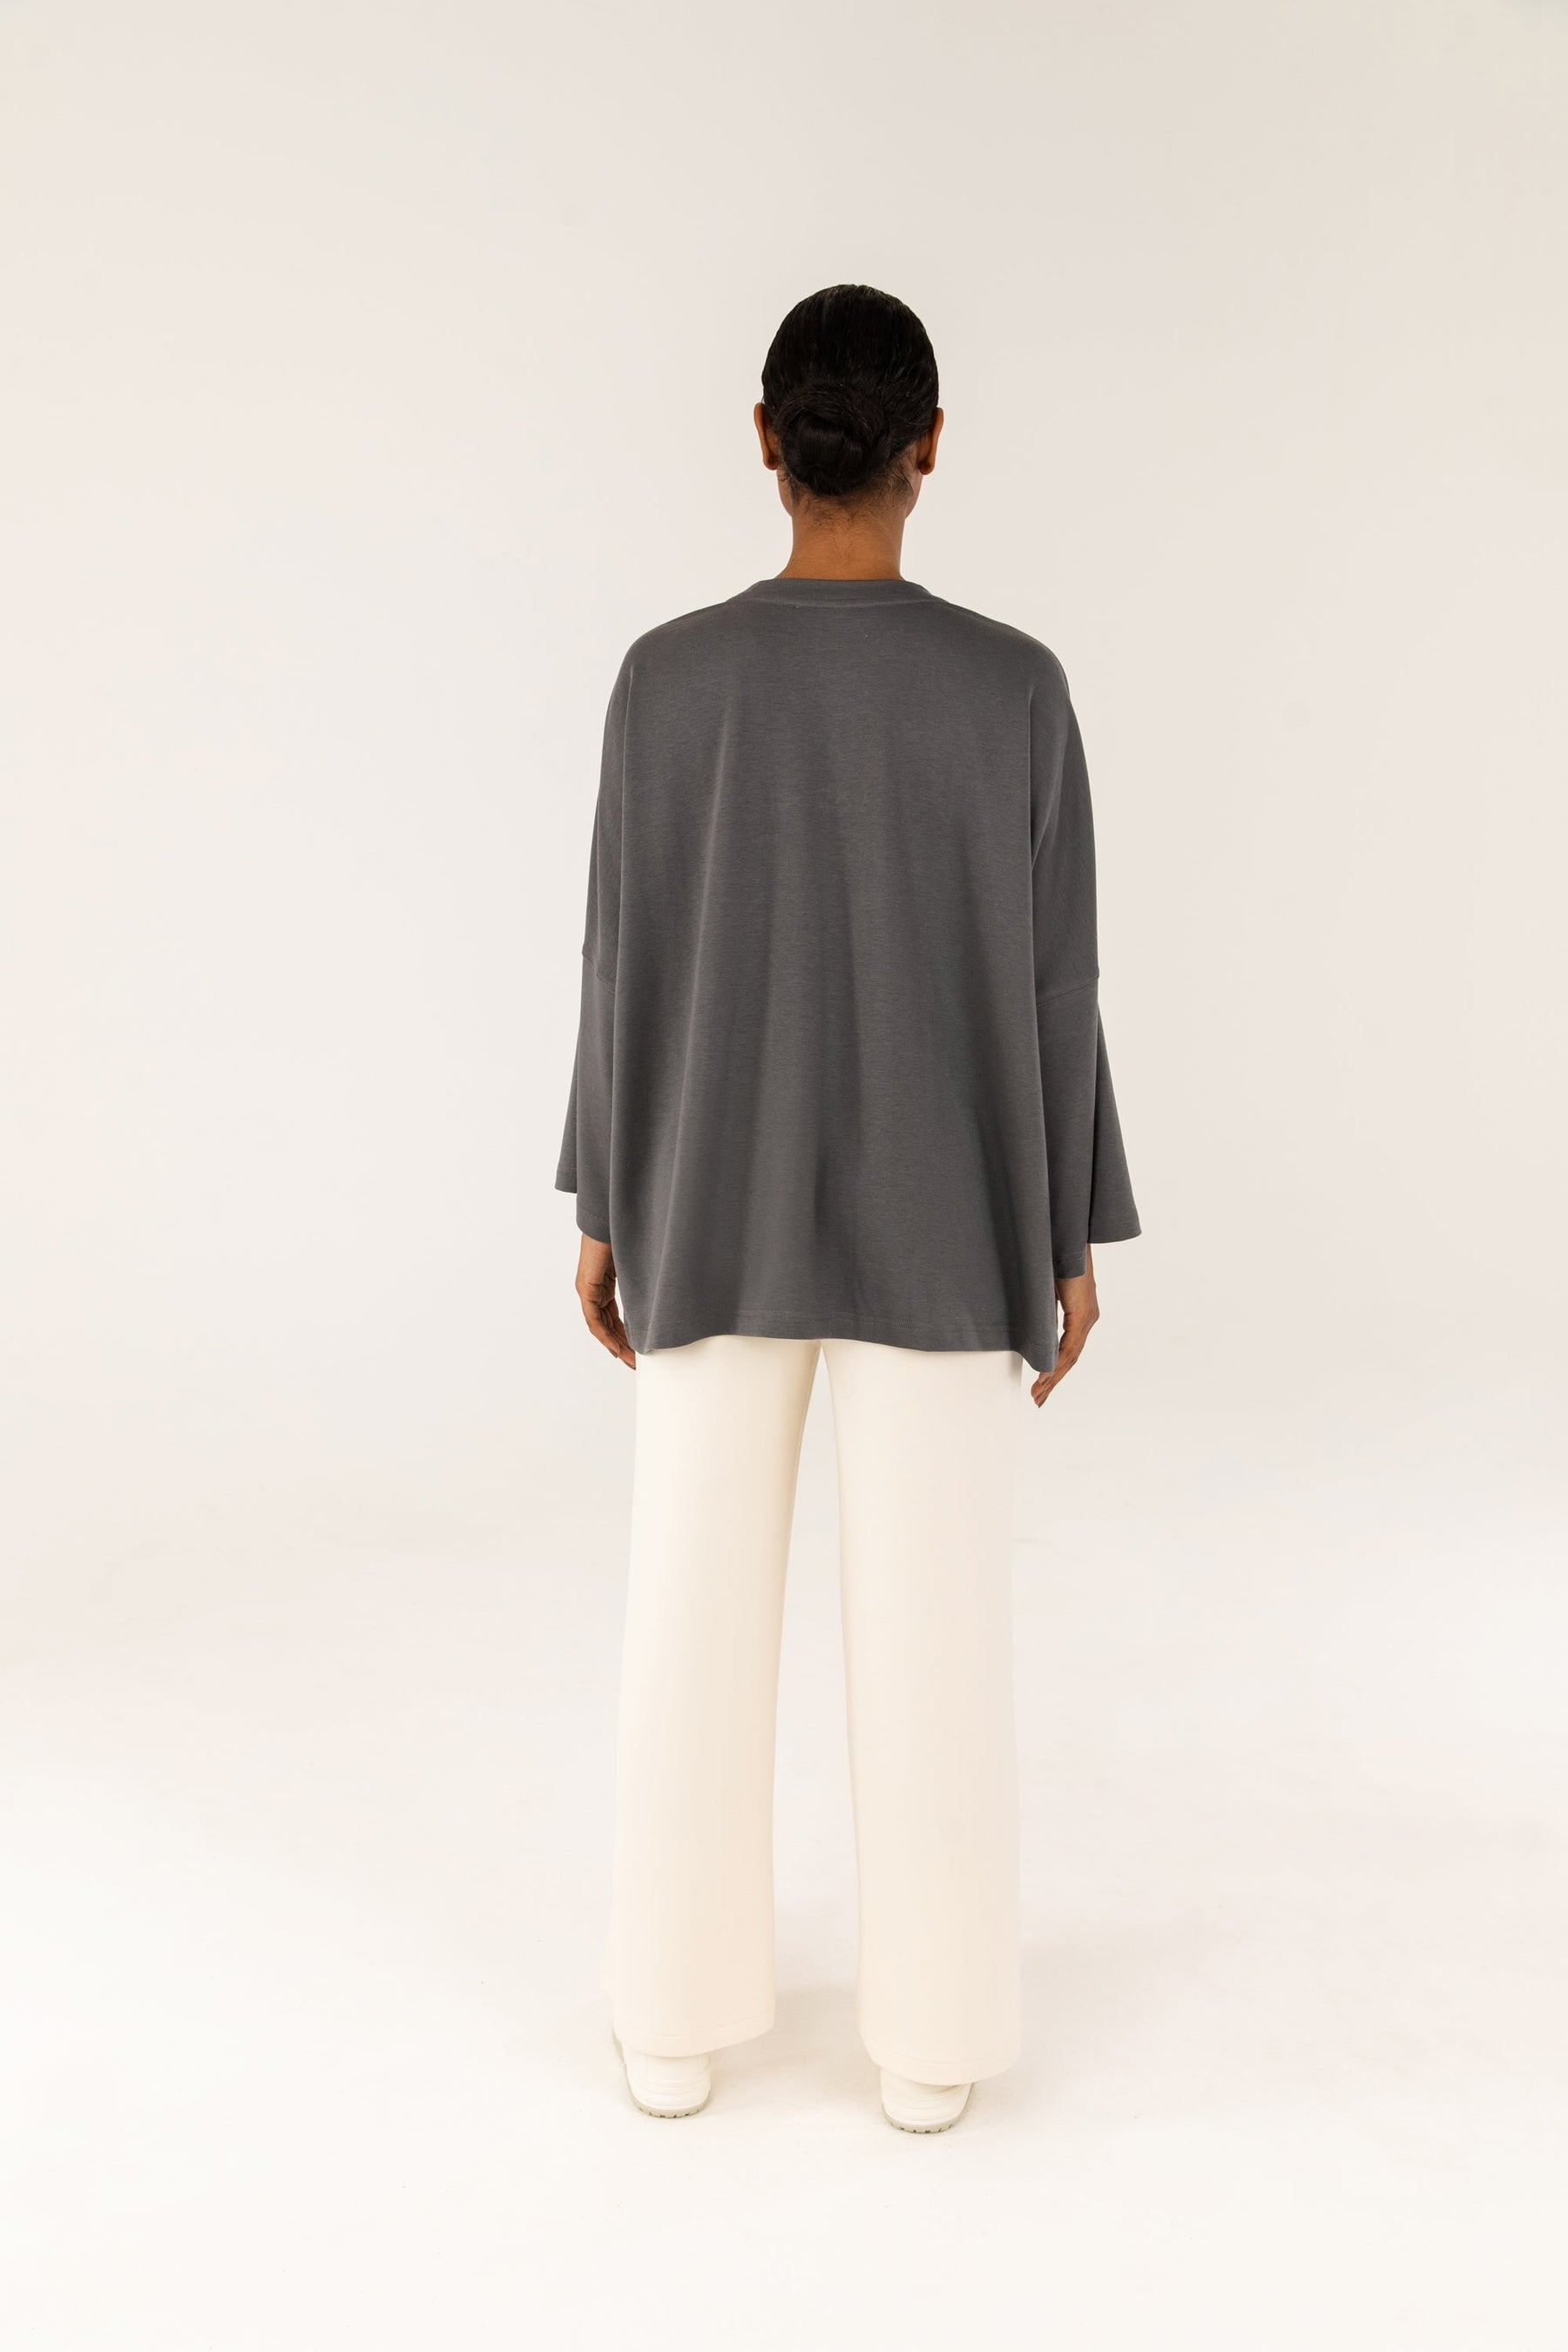 Loose Long Sleeve T Shirt - Dark Grey Veiled Collection 